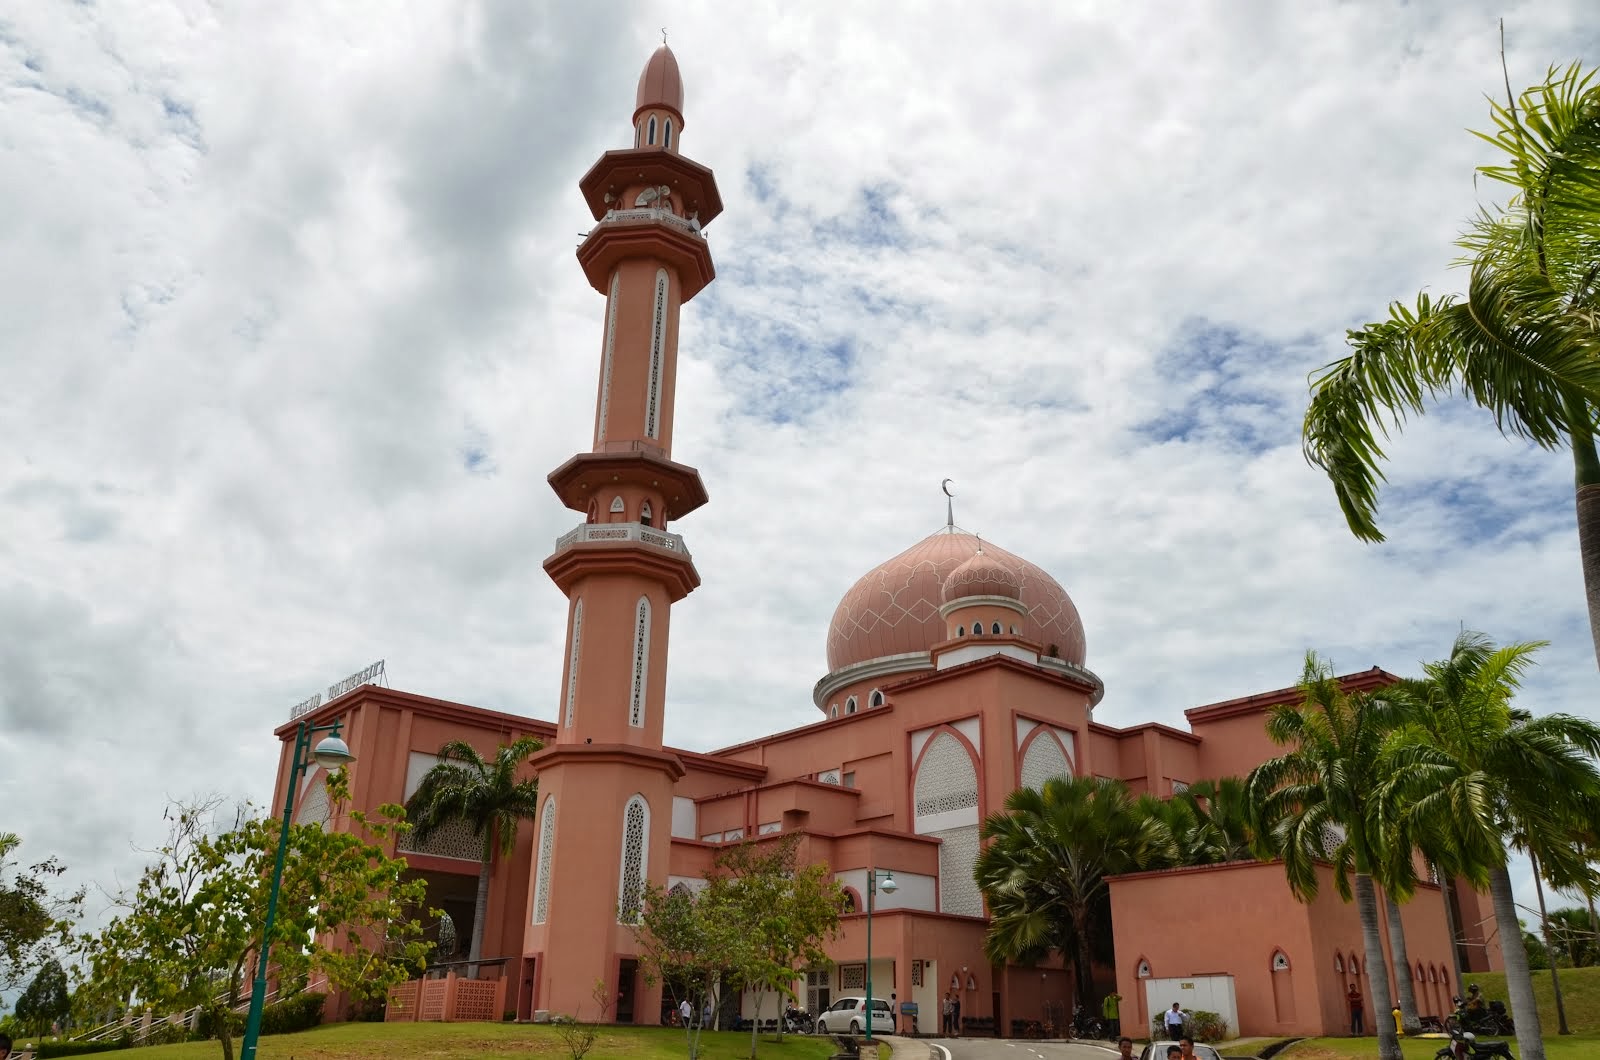  POTO Travel Tours Gambar Masjid Yang Indah di Malaysia 